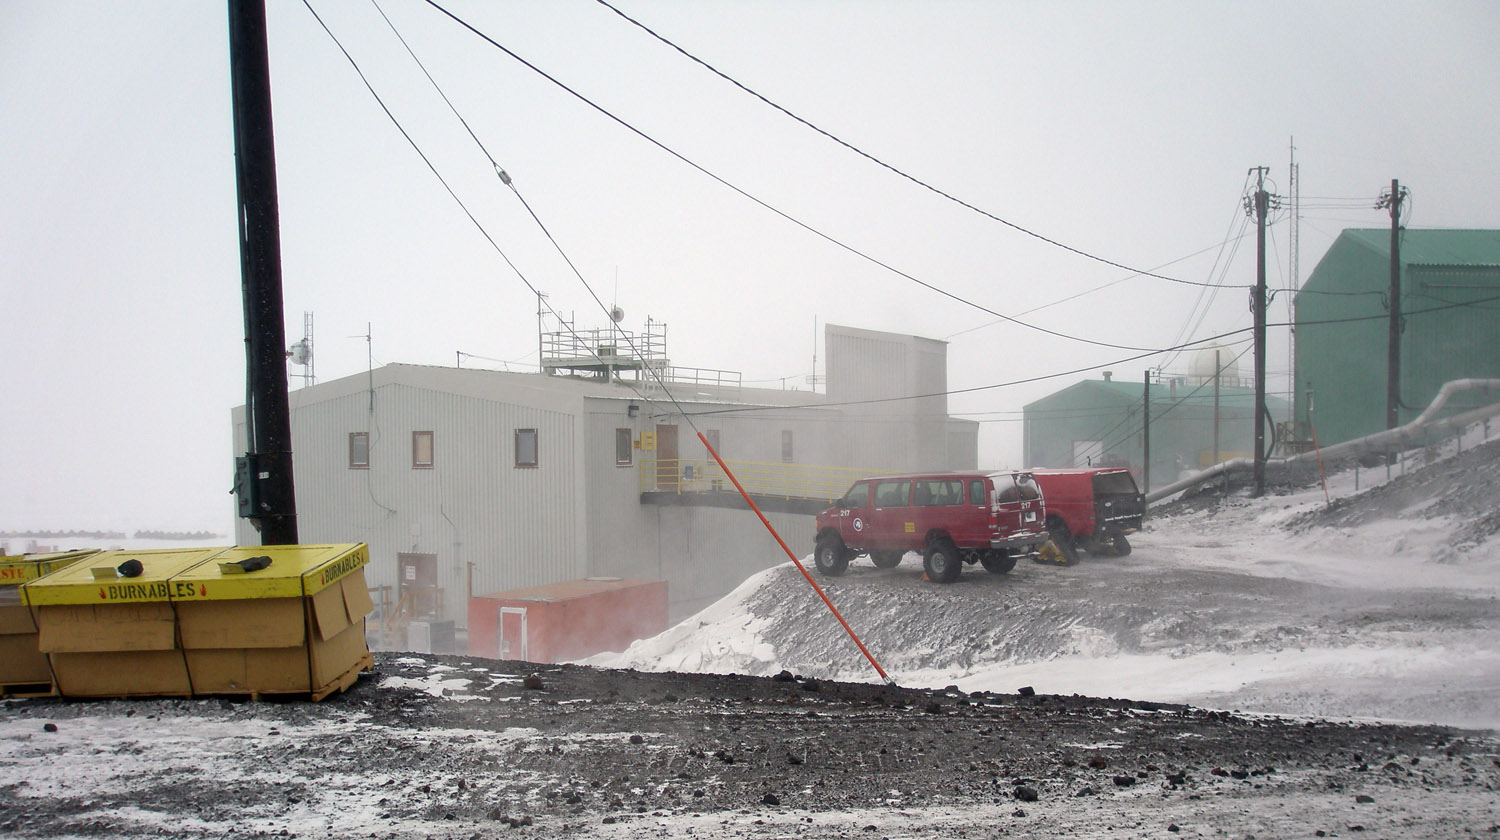 Waste Treatment Plant, McMurdo